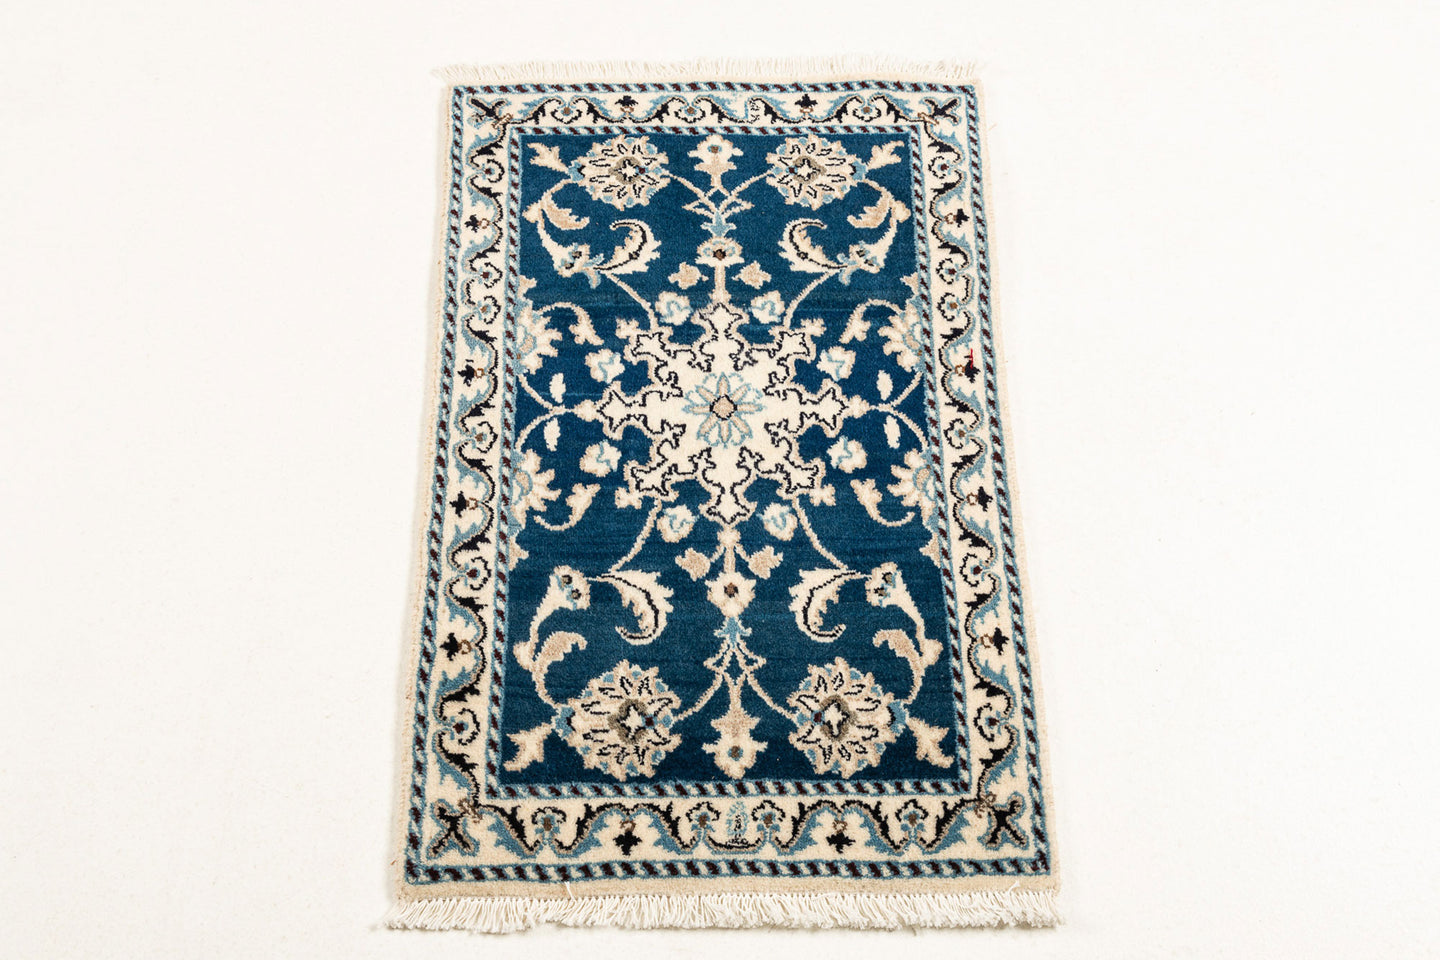 Authentic original hand knotted carpet 90x60 CM